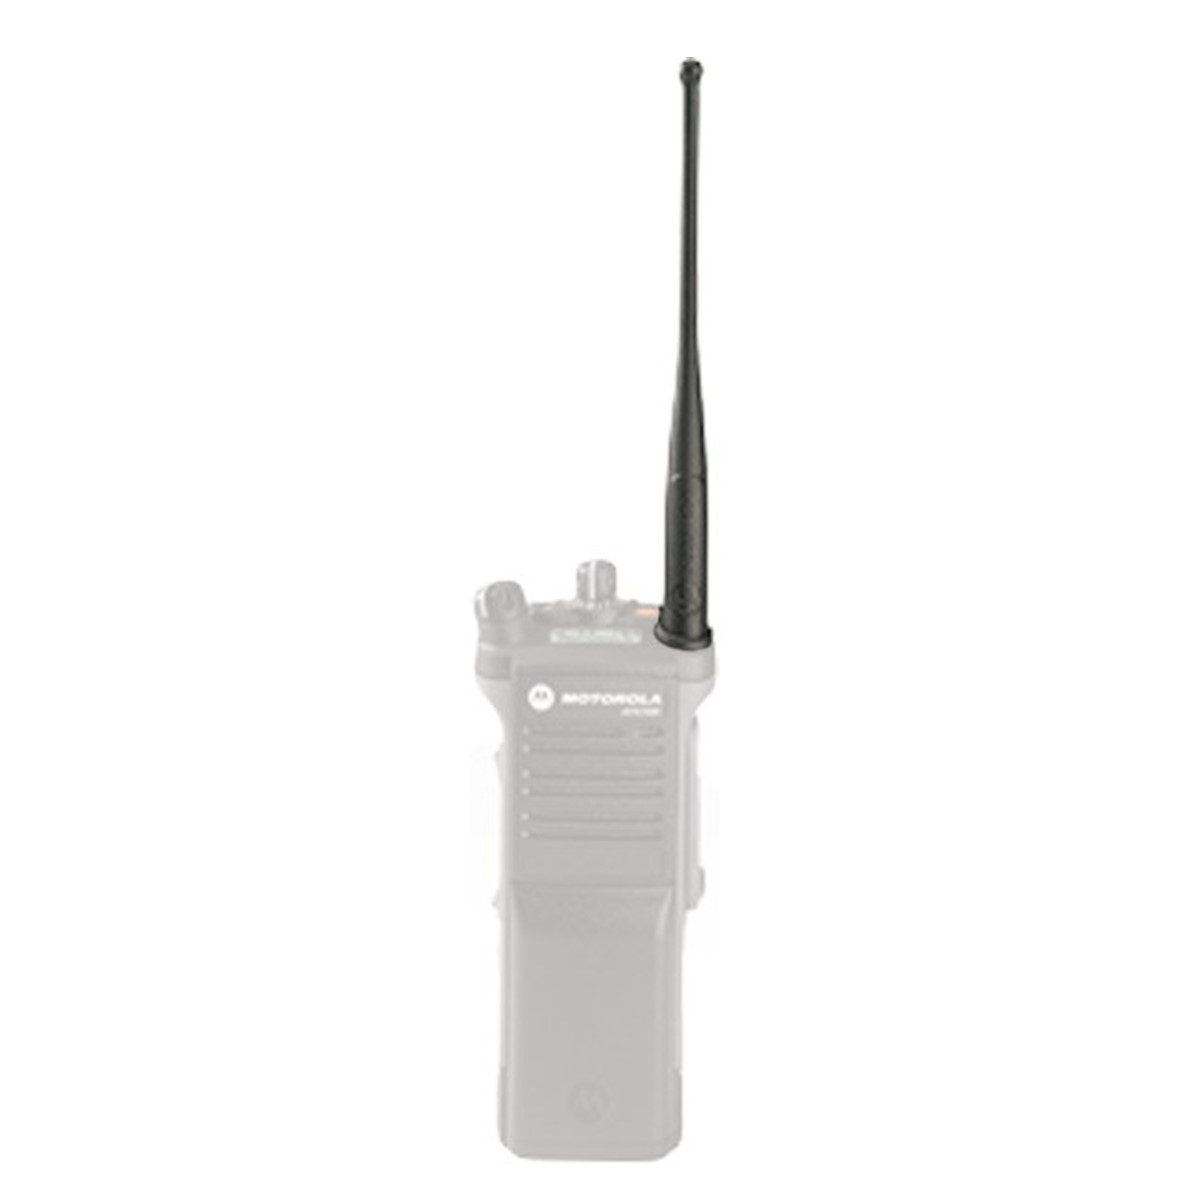 Antena Motorola para radio APX2000 VHF-GPS tipo látigo NAR6593